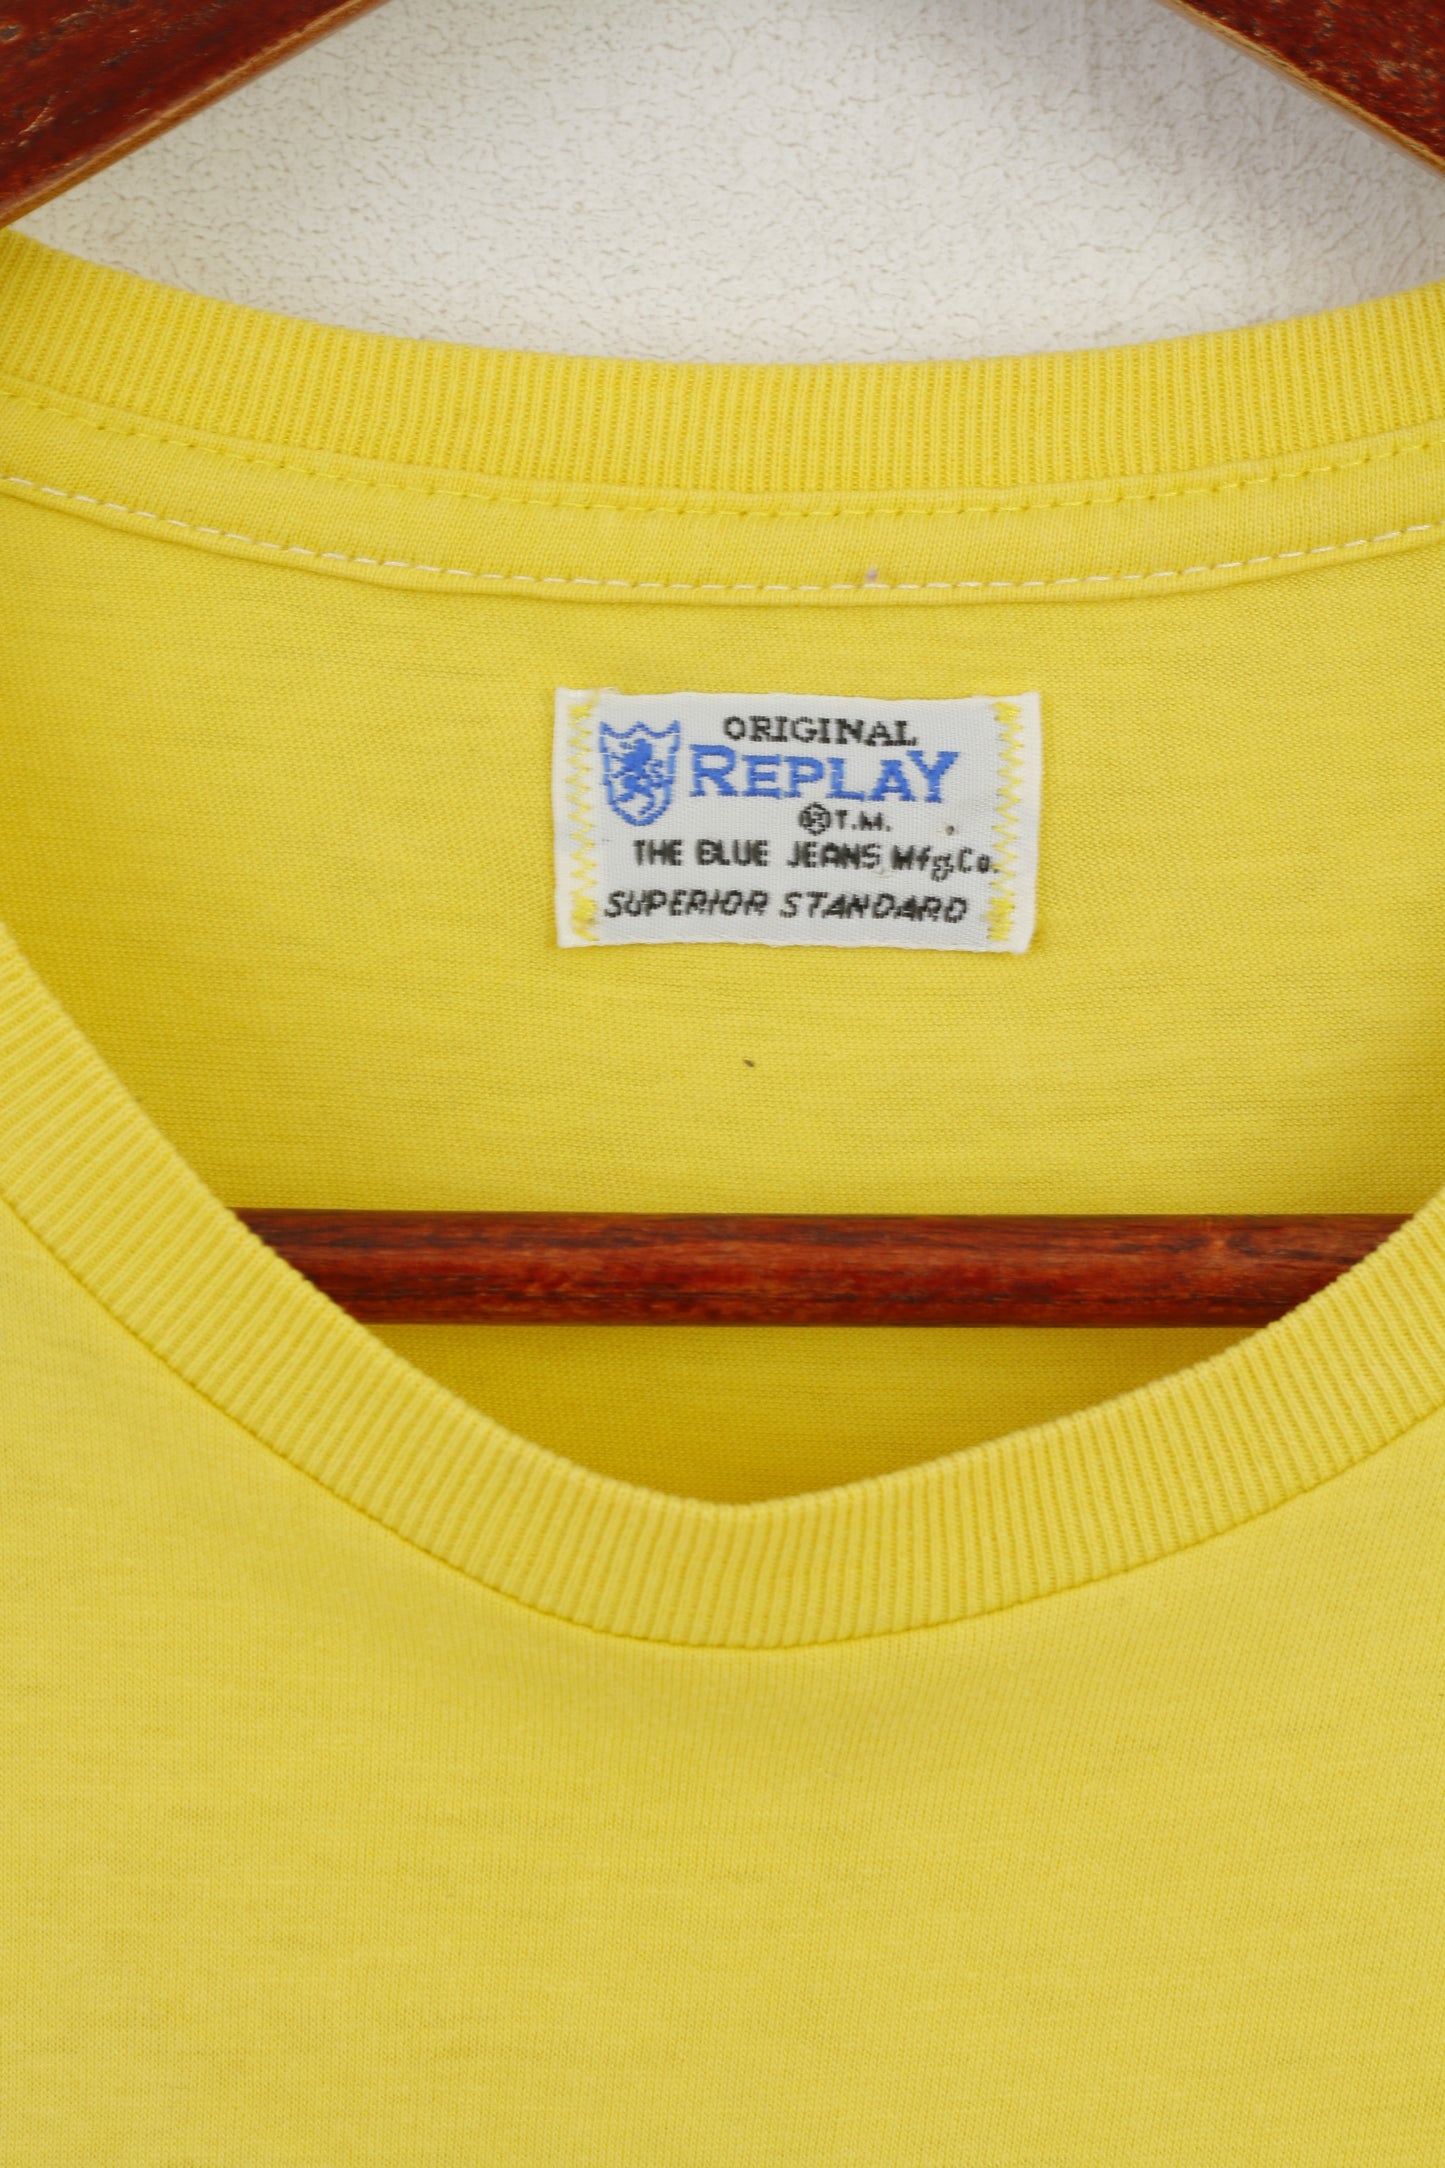 Replay Men M Shirt Yellow Graphic Cotton Pretty Little Dog Crew Neck Top